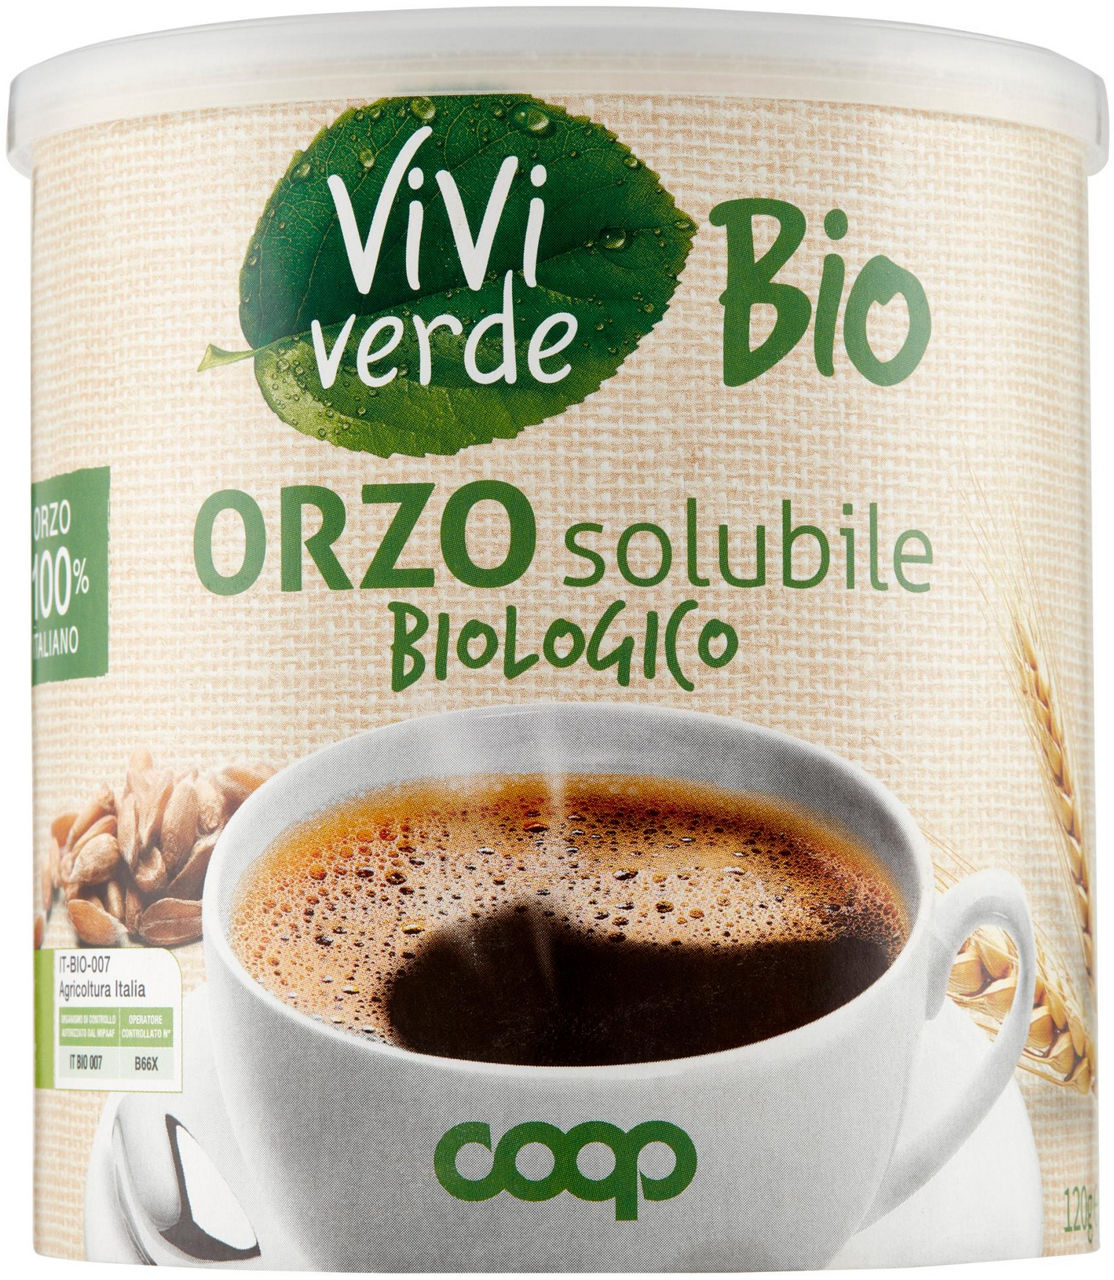 orzo solubile Biologico Vivi Verde 120 g - 0